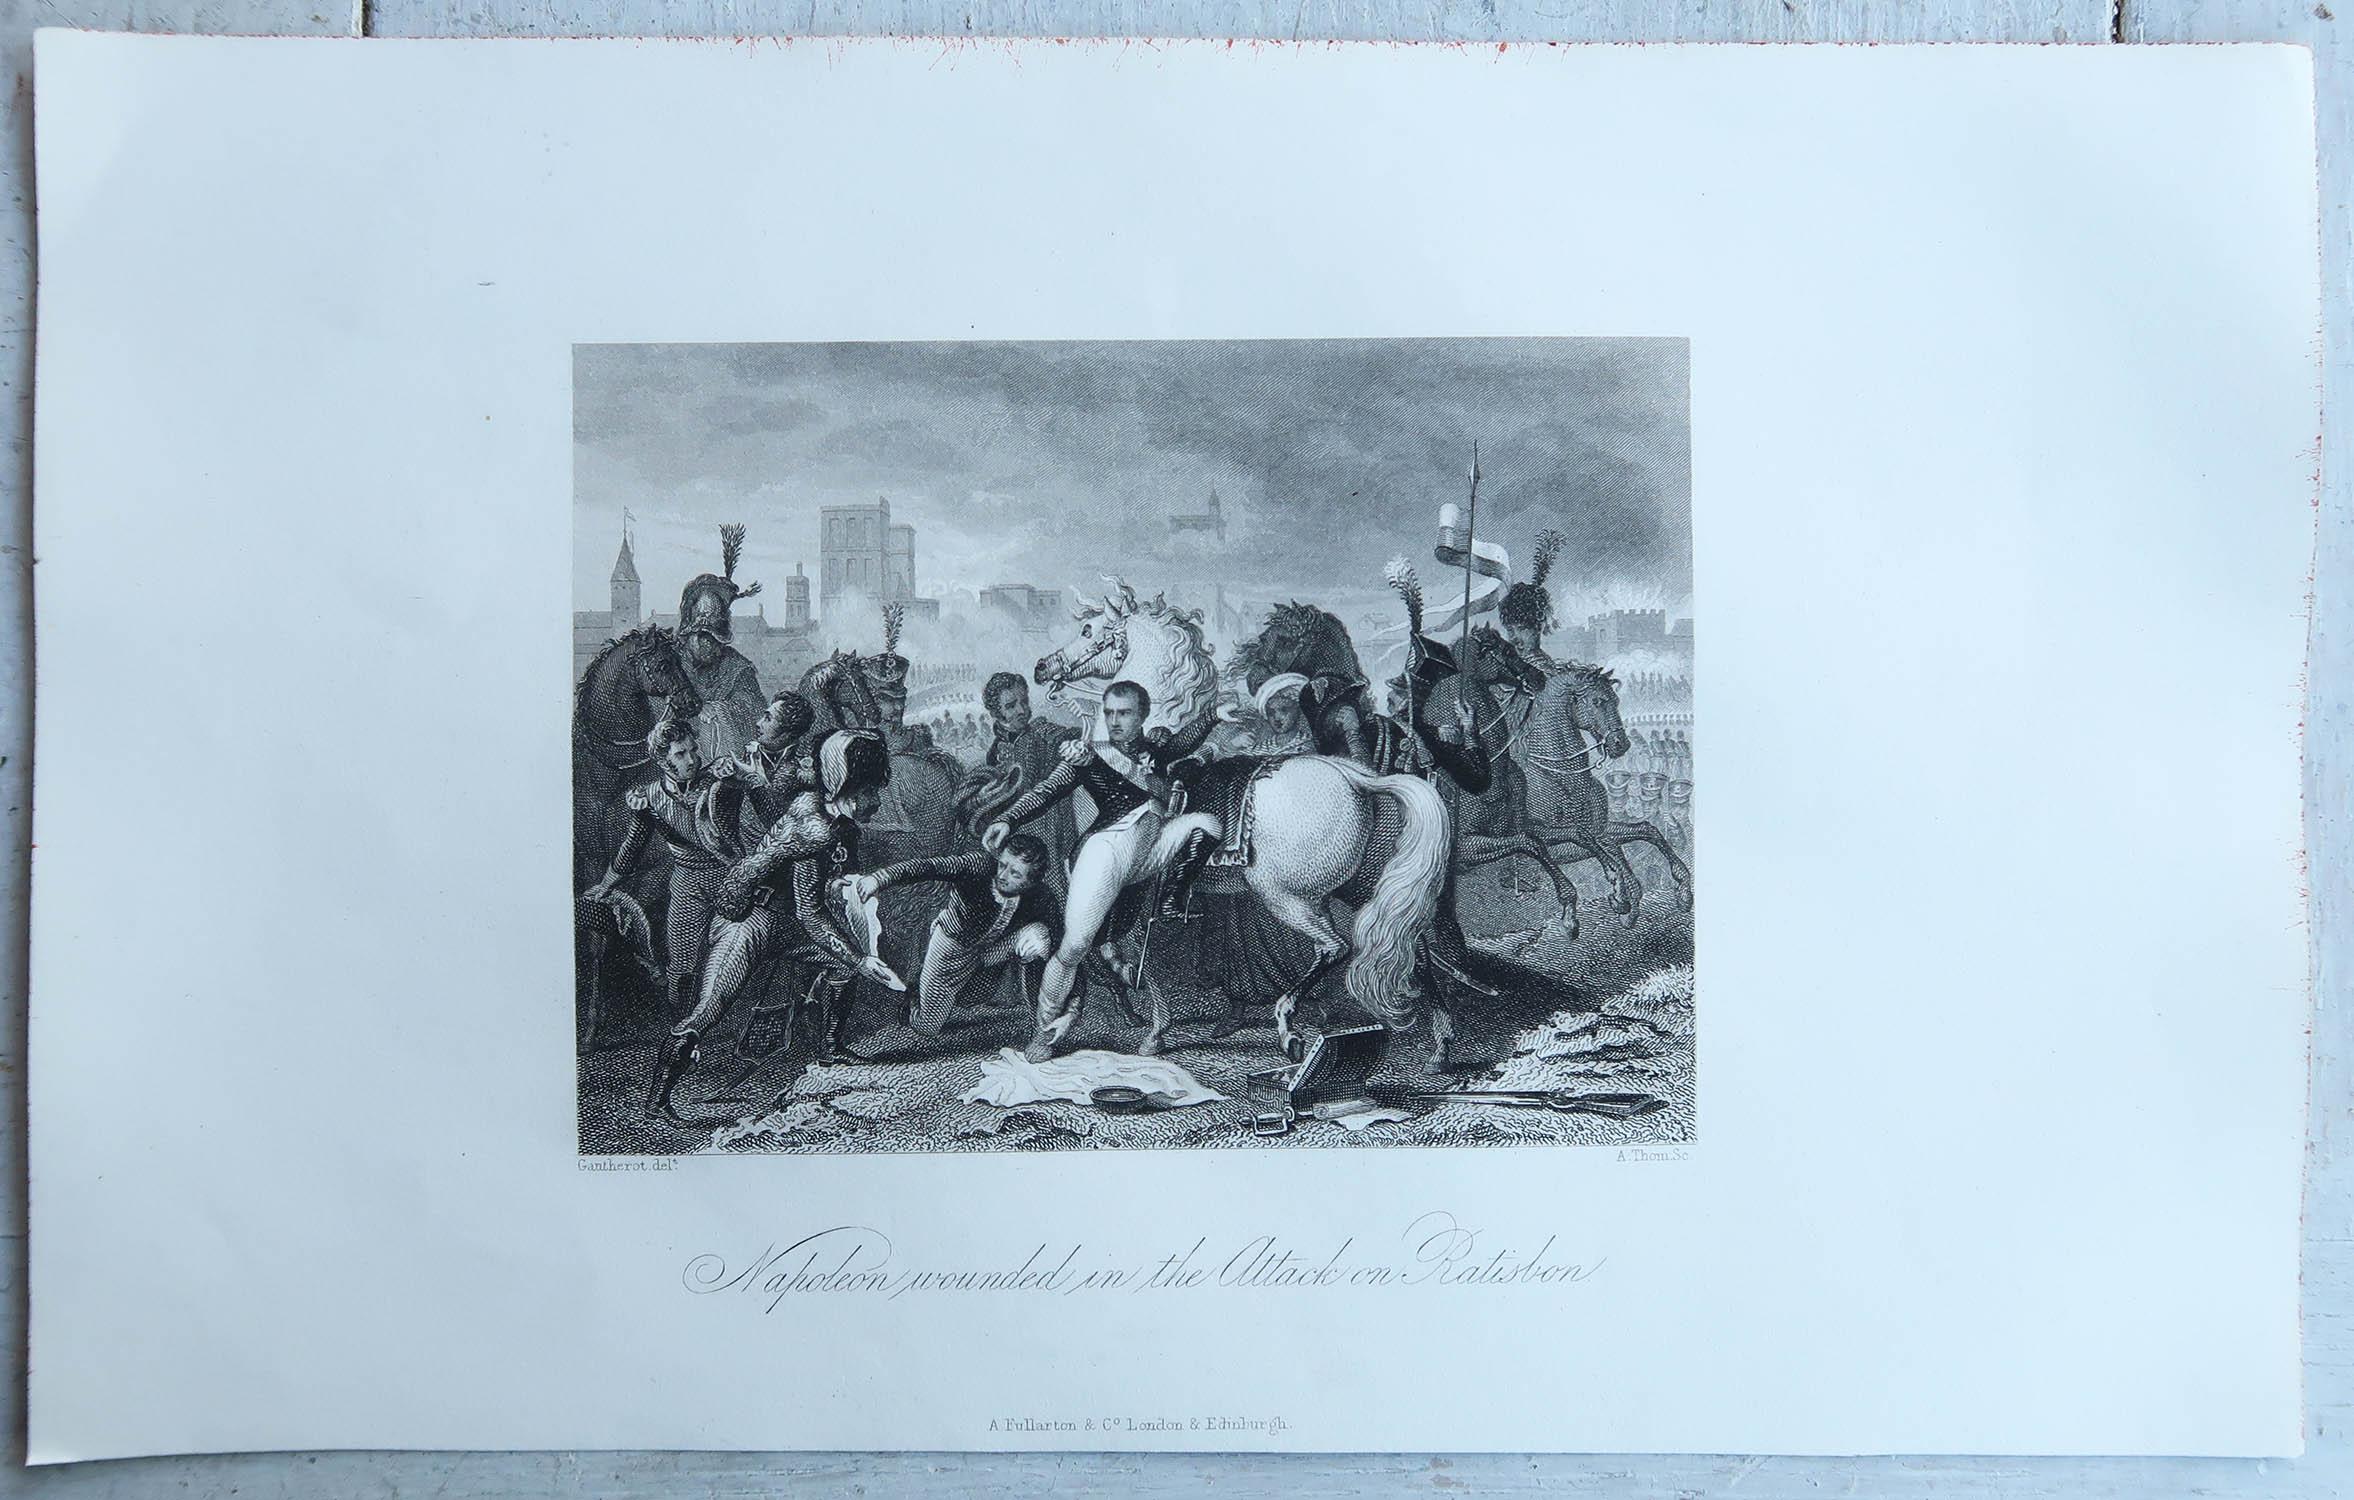 Other Original Antique Print of Napoleon Bonaparte - Ratisbon. Circa 1850